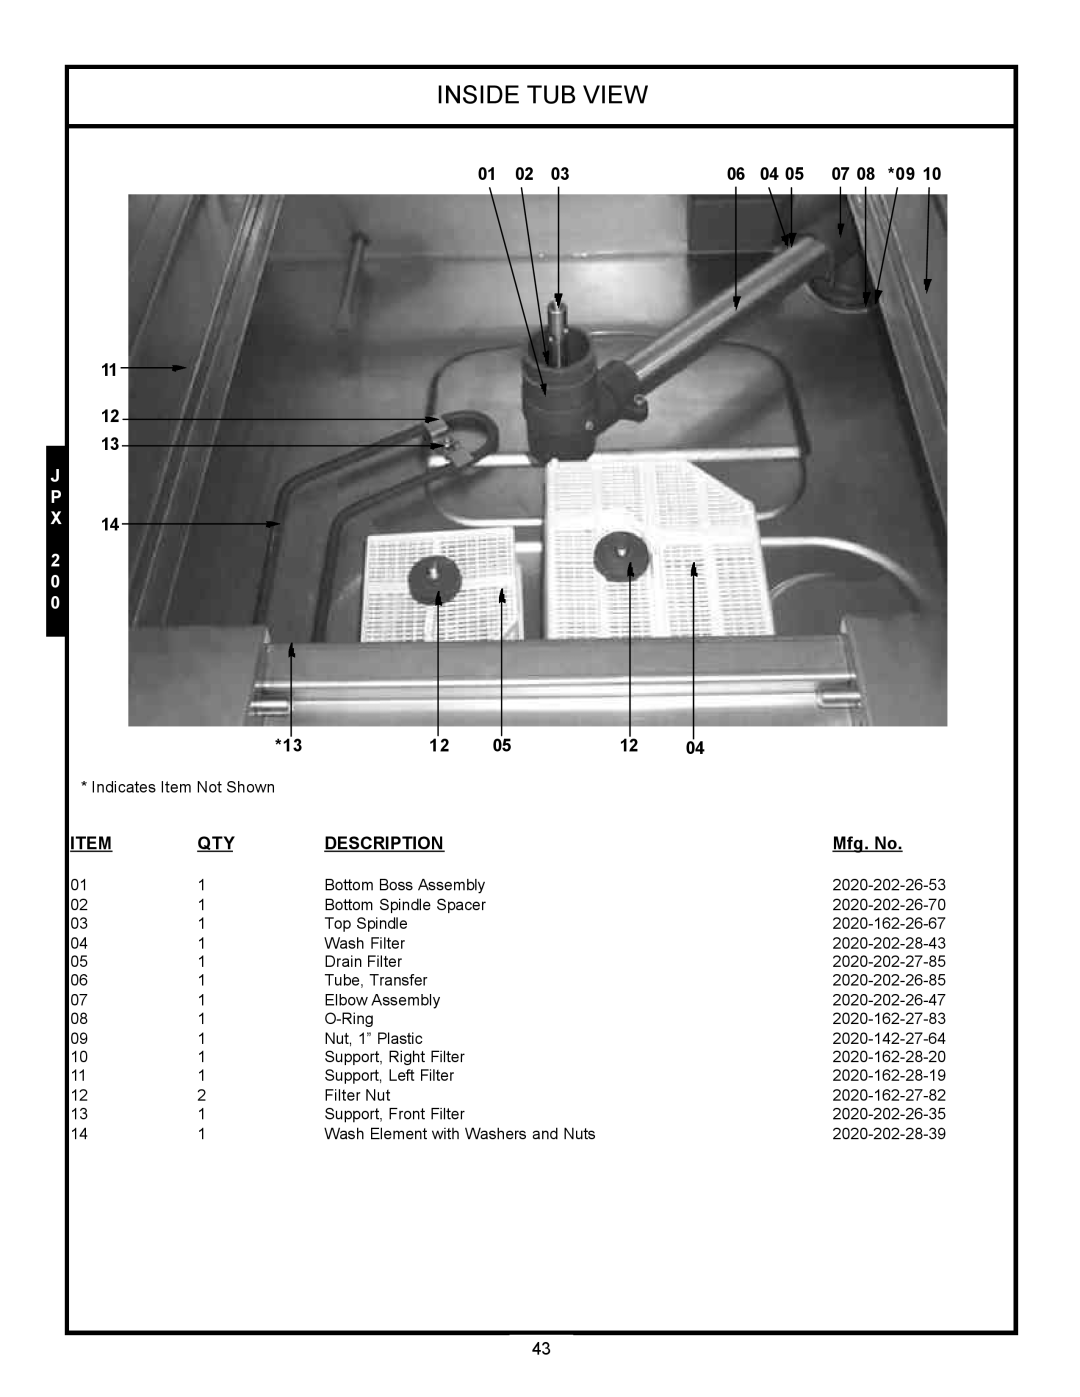 Jackson JPX-160, JPX-200, jpx-140 service manual Inside Tub View, Description, Mfg. No 